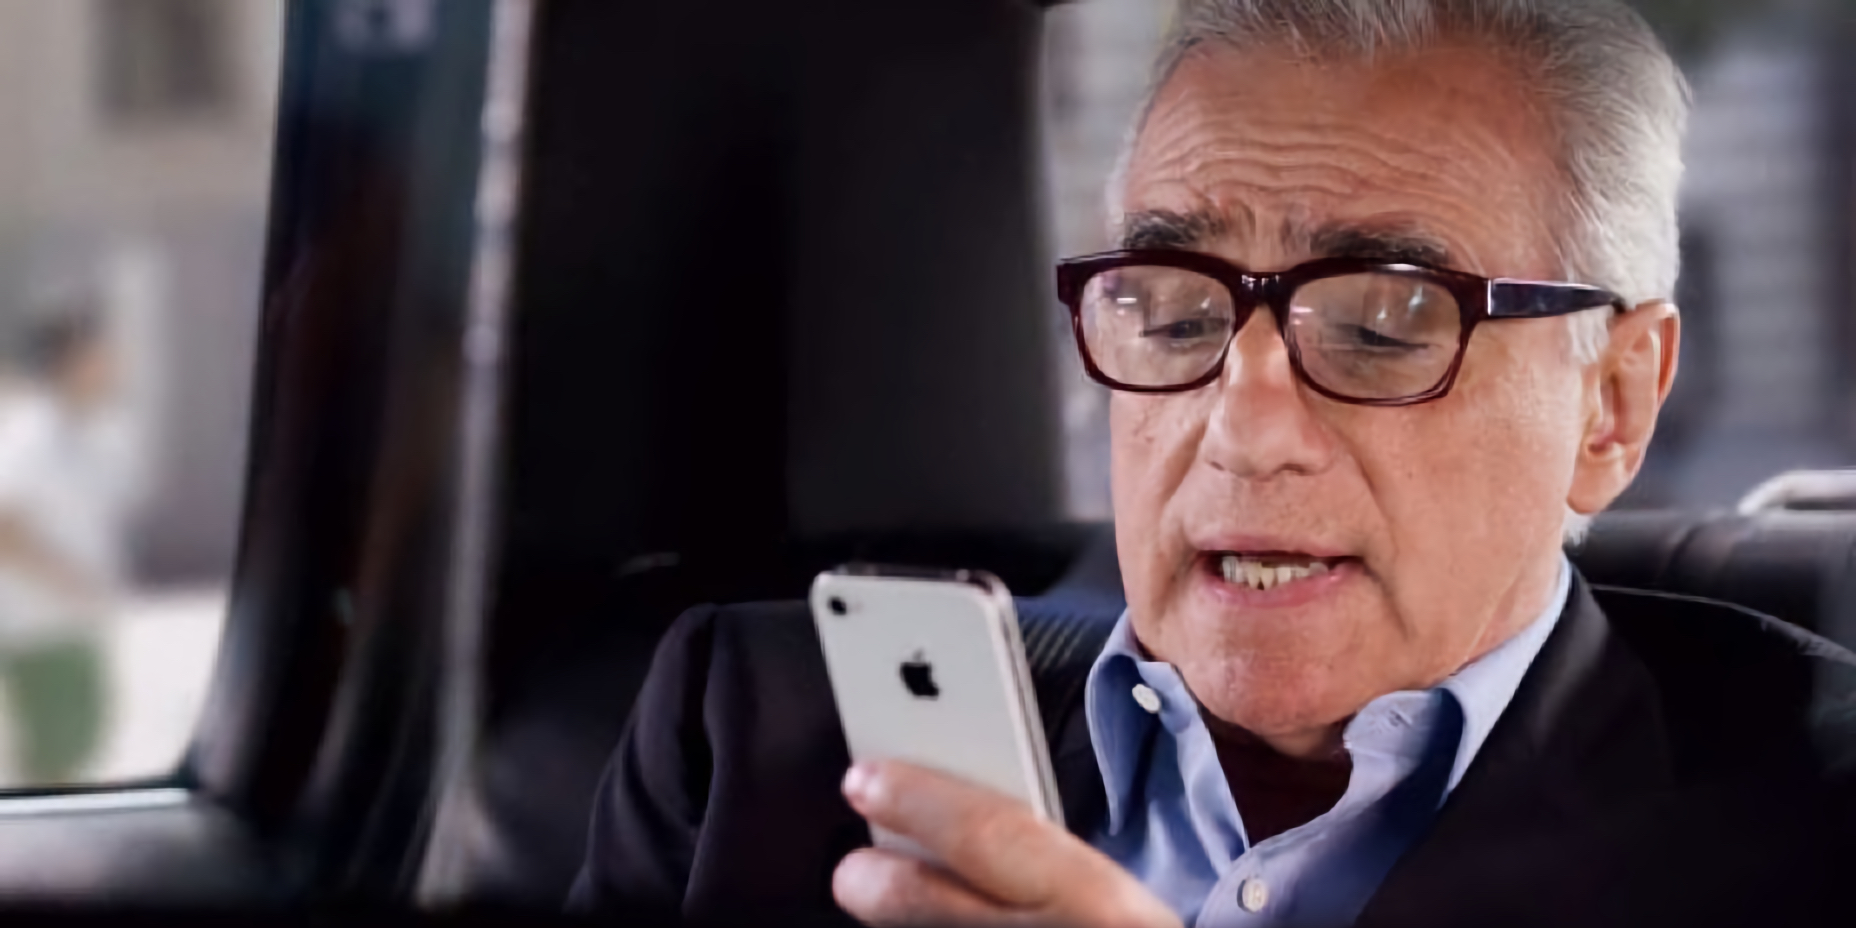 Apple reaches deal for upcoming Martin Scorsese film starring Leonardo DiCaprio and Robert De Niro - 9to5Mac